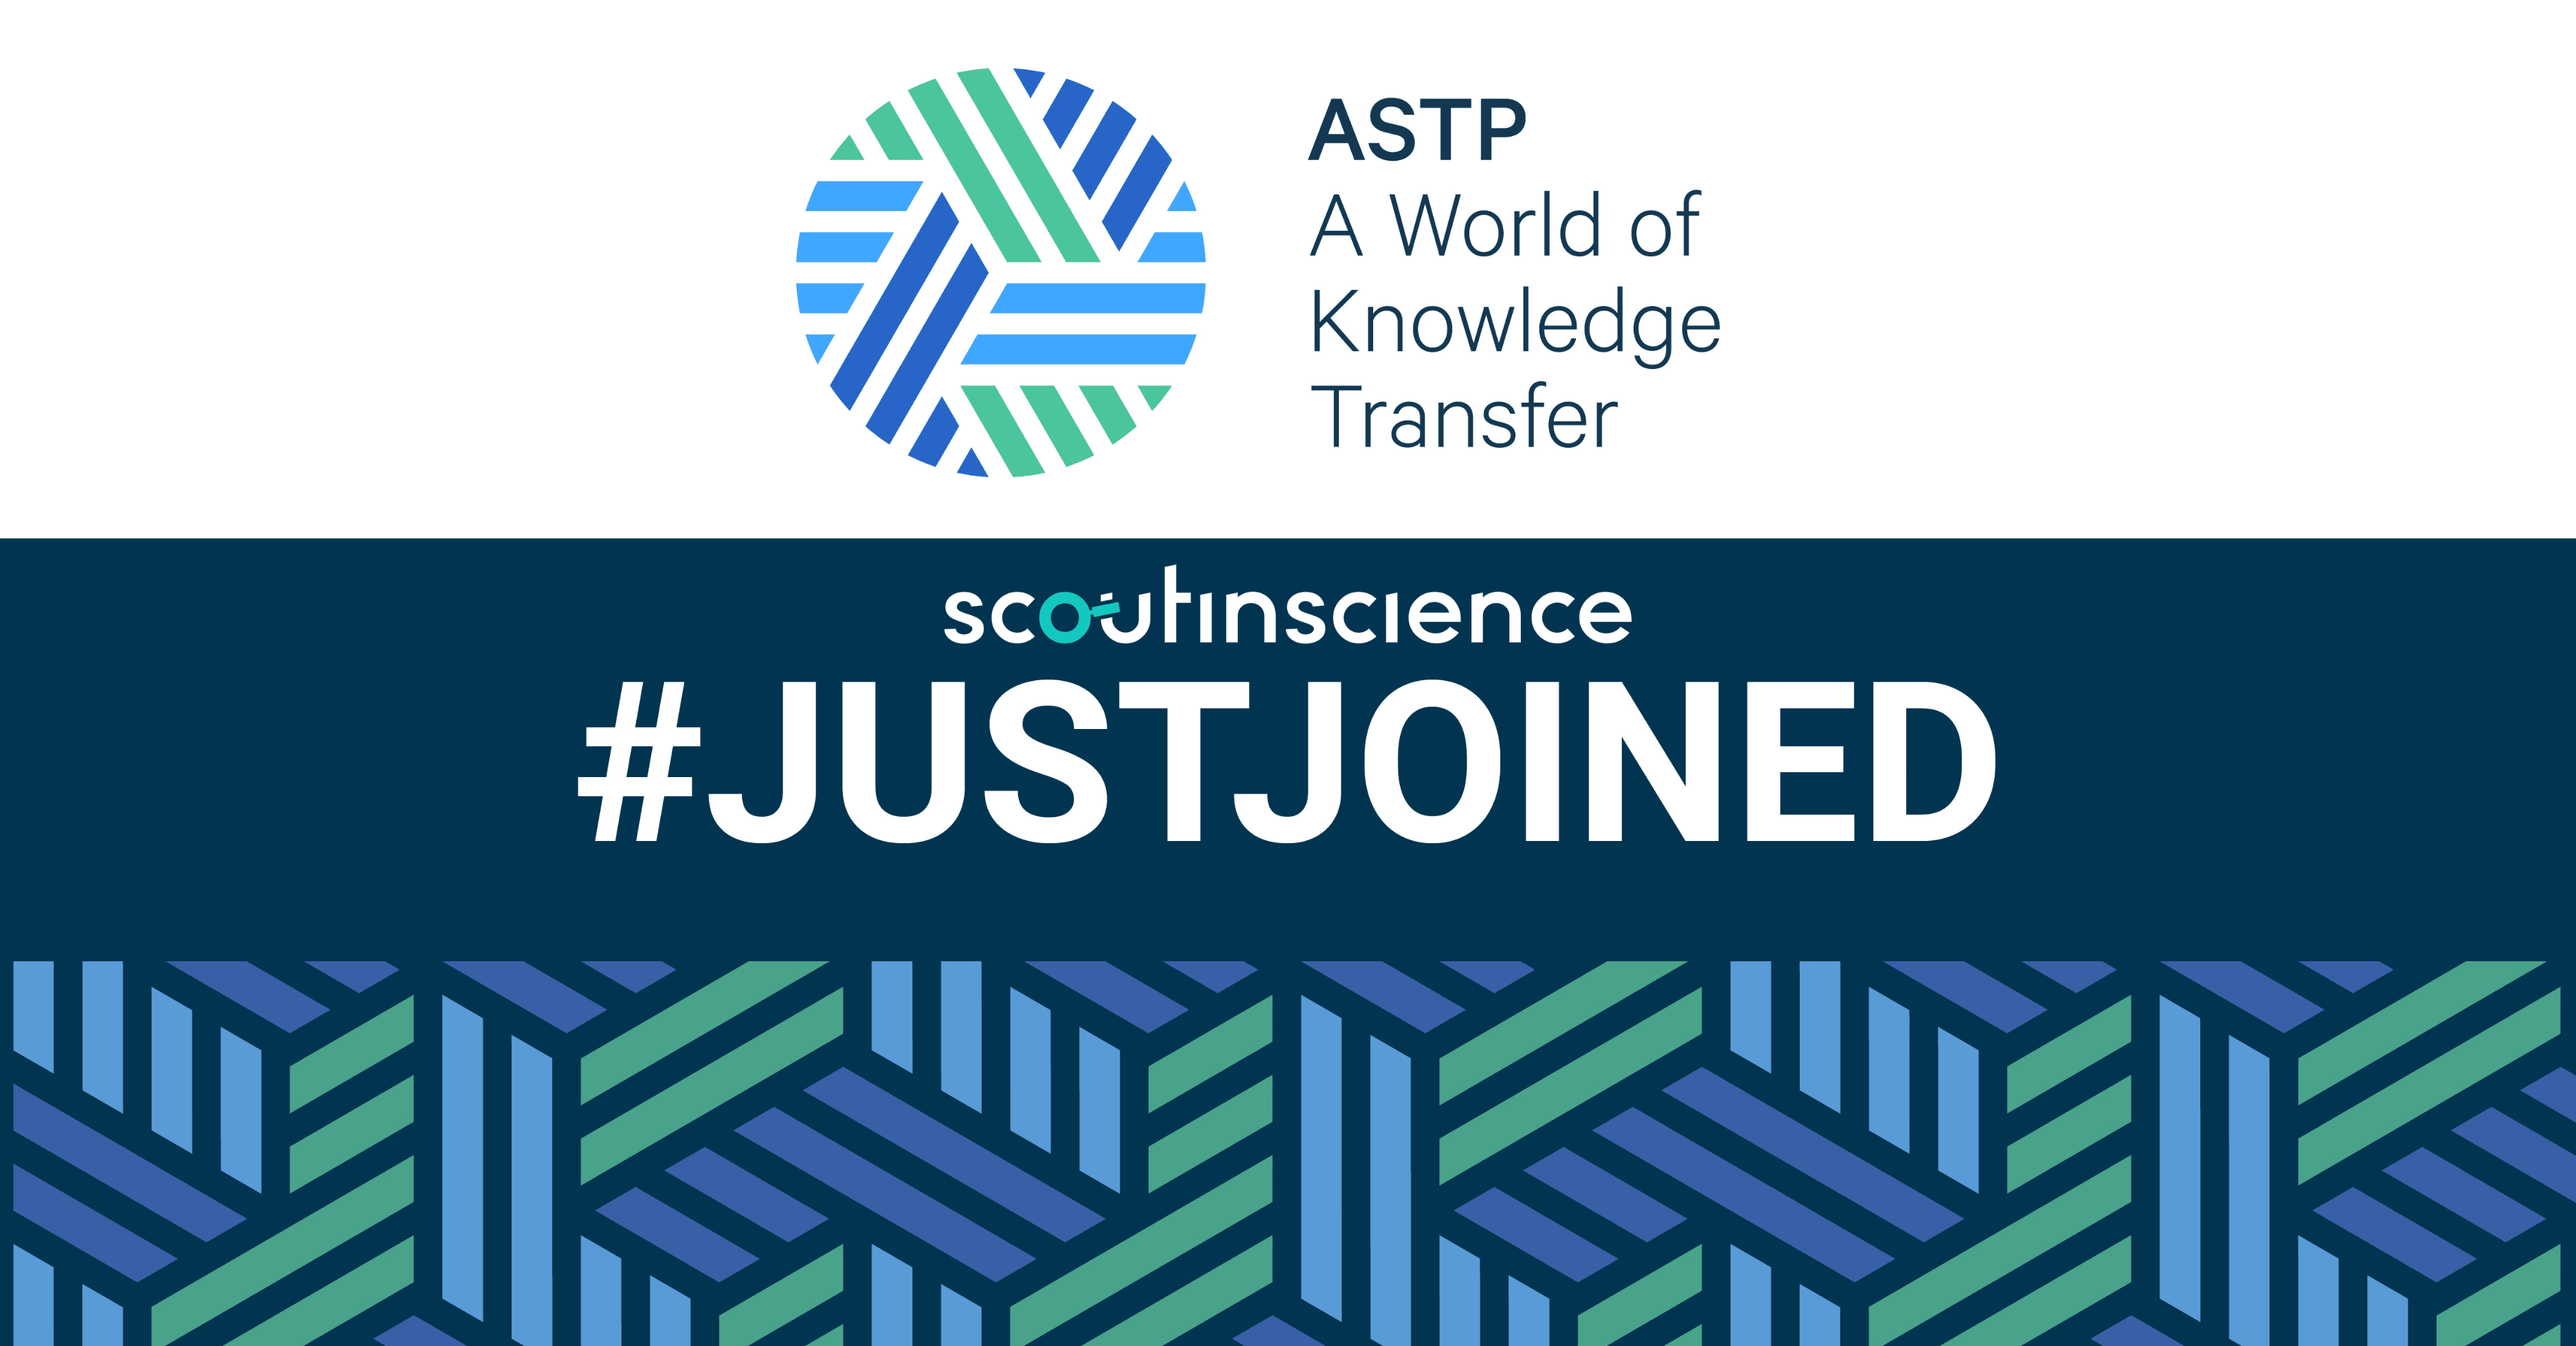 ASTP Community & ScoutinScience